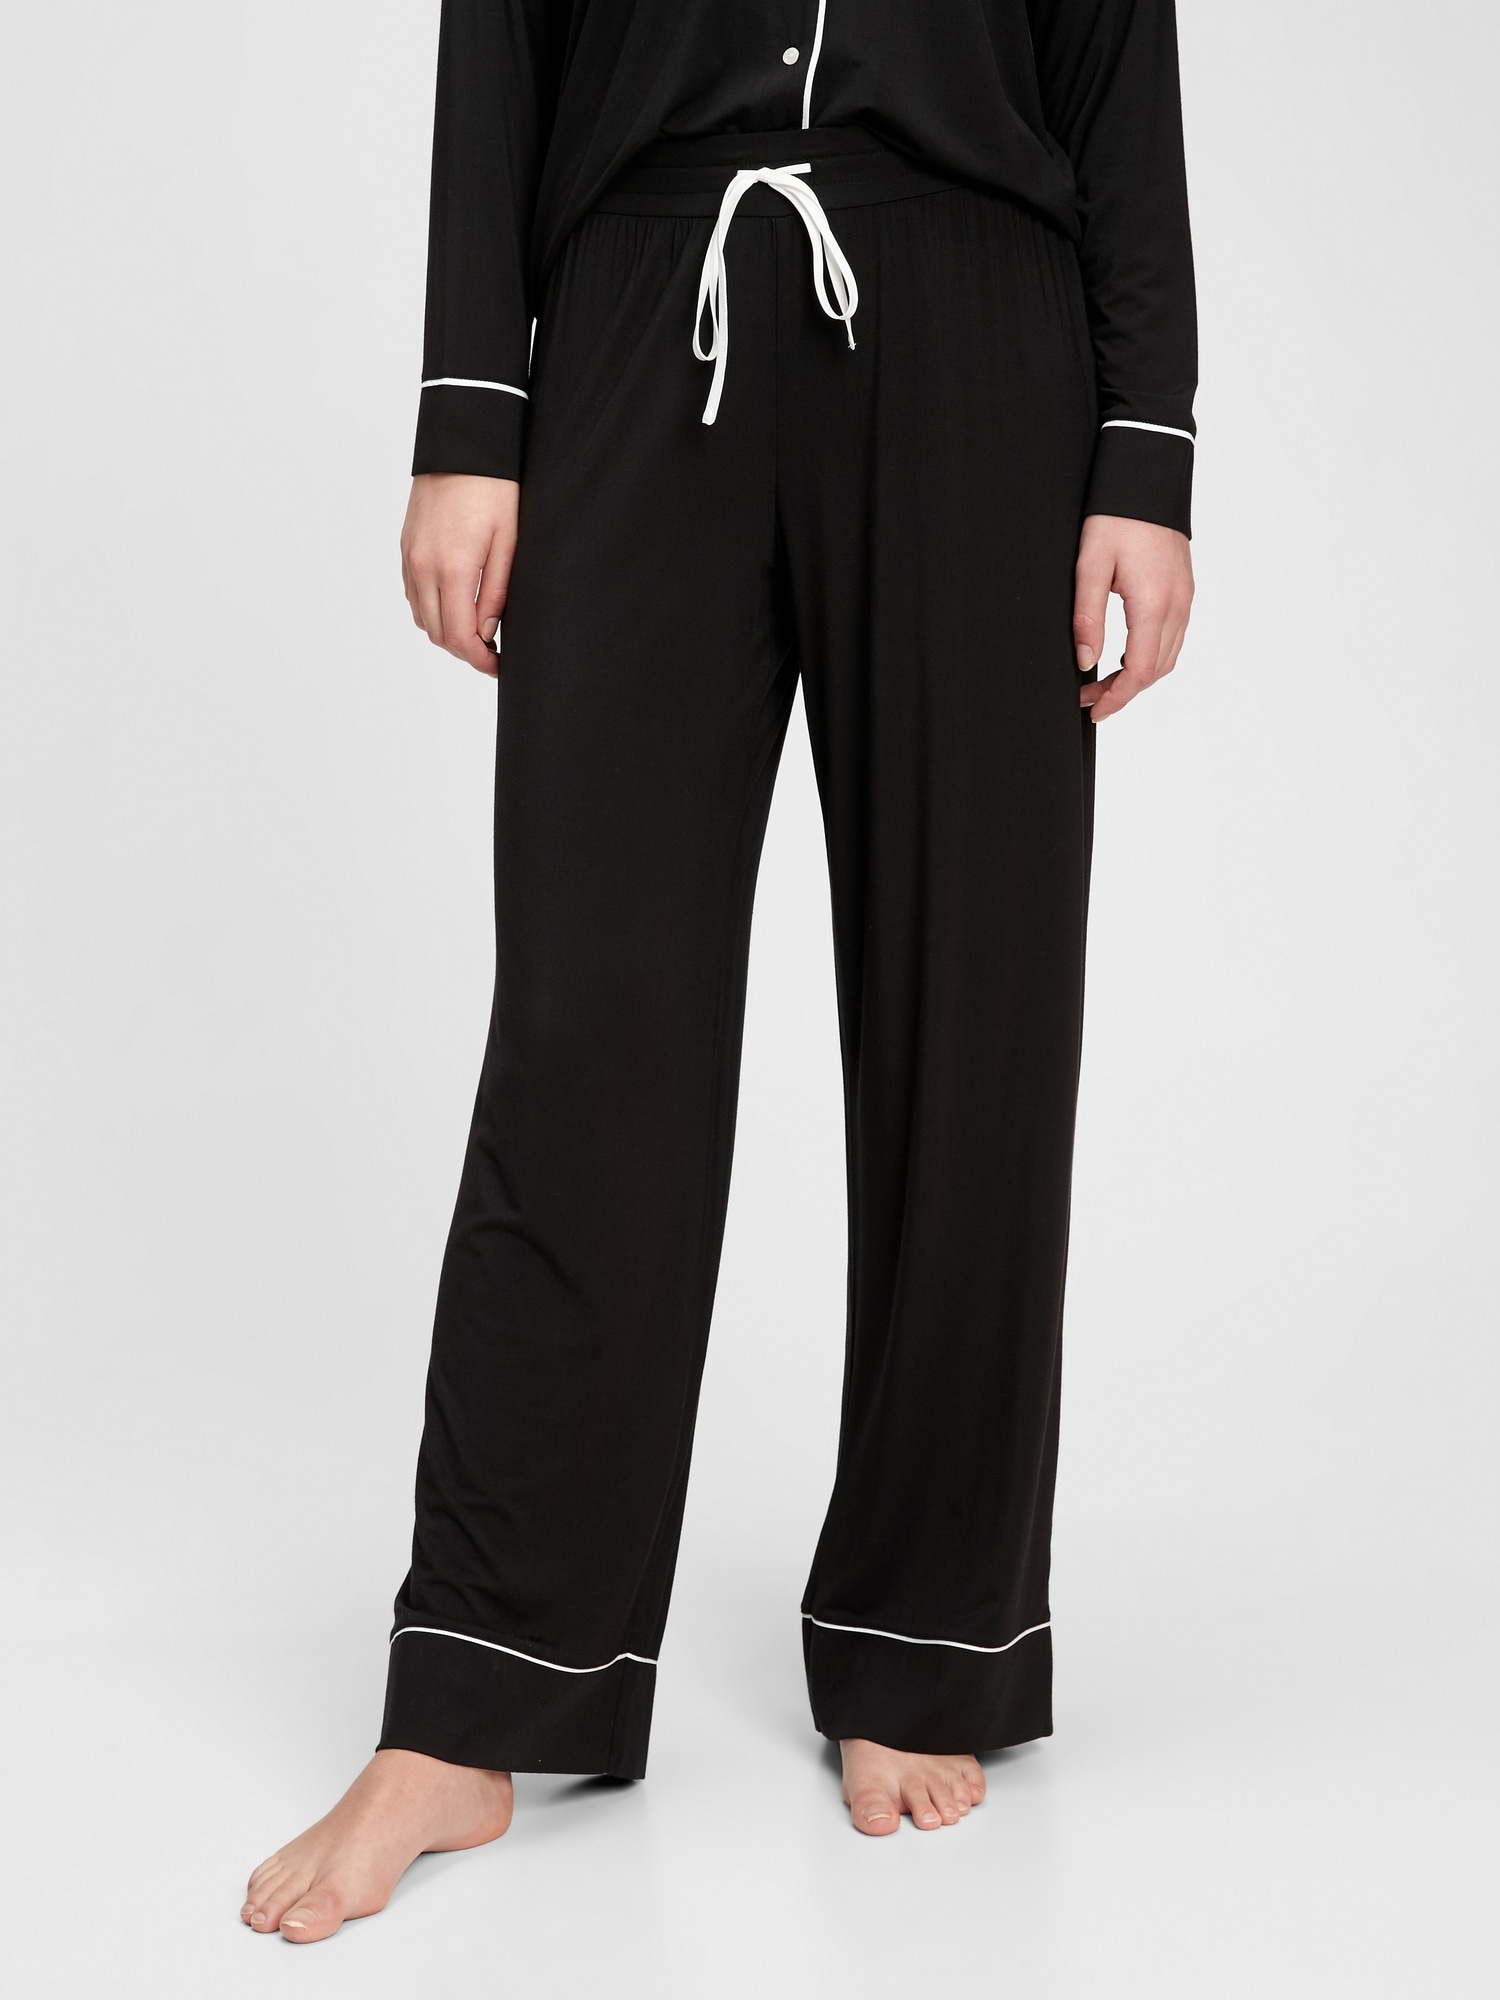 Mon Loungewear Classic Basic Style Black Modal Pajamas Set